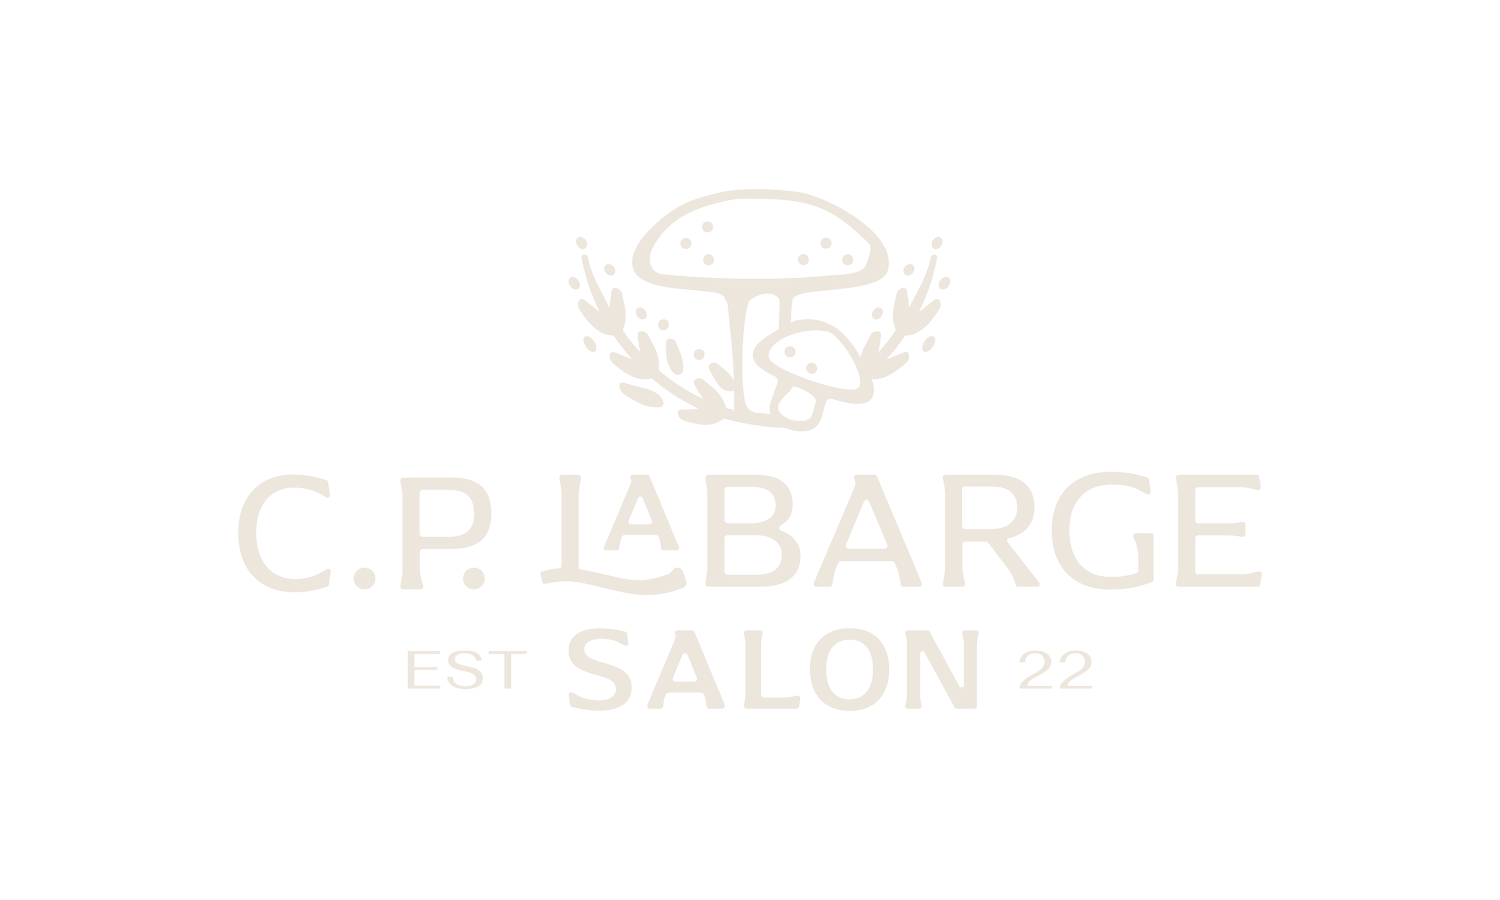 C.P. LaBarge Salon